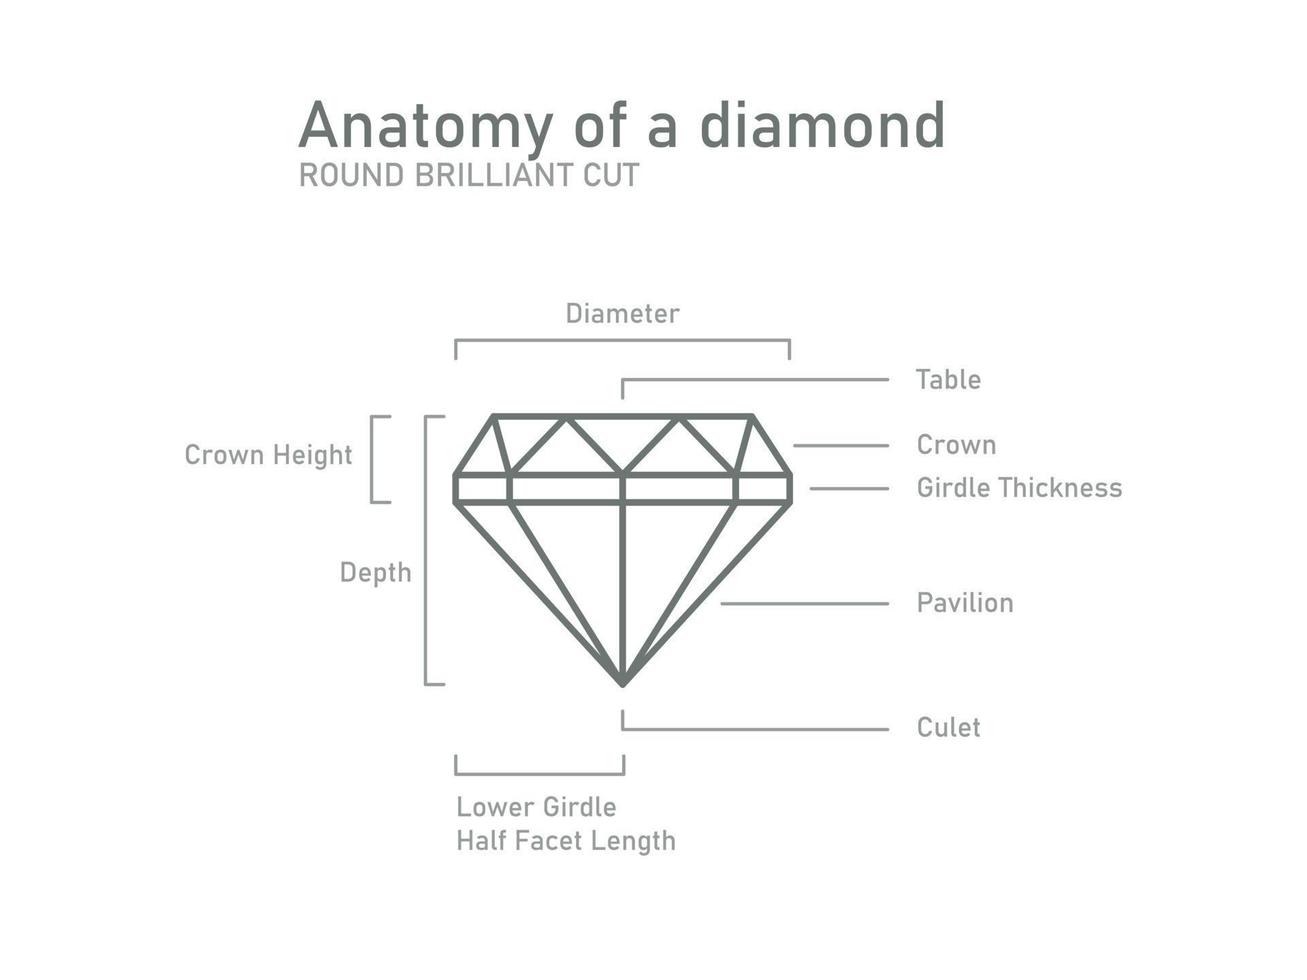 Anatomy of a diamond scheme. Brillianat shapes  and naming. Vector